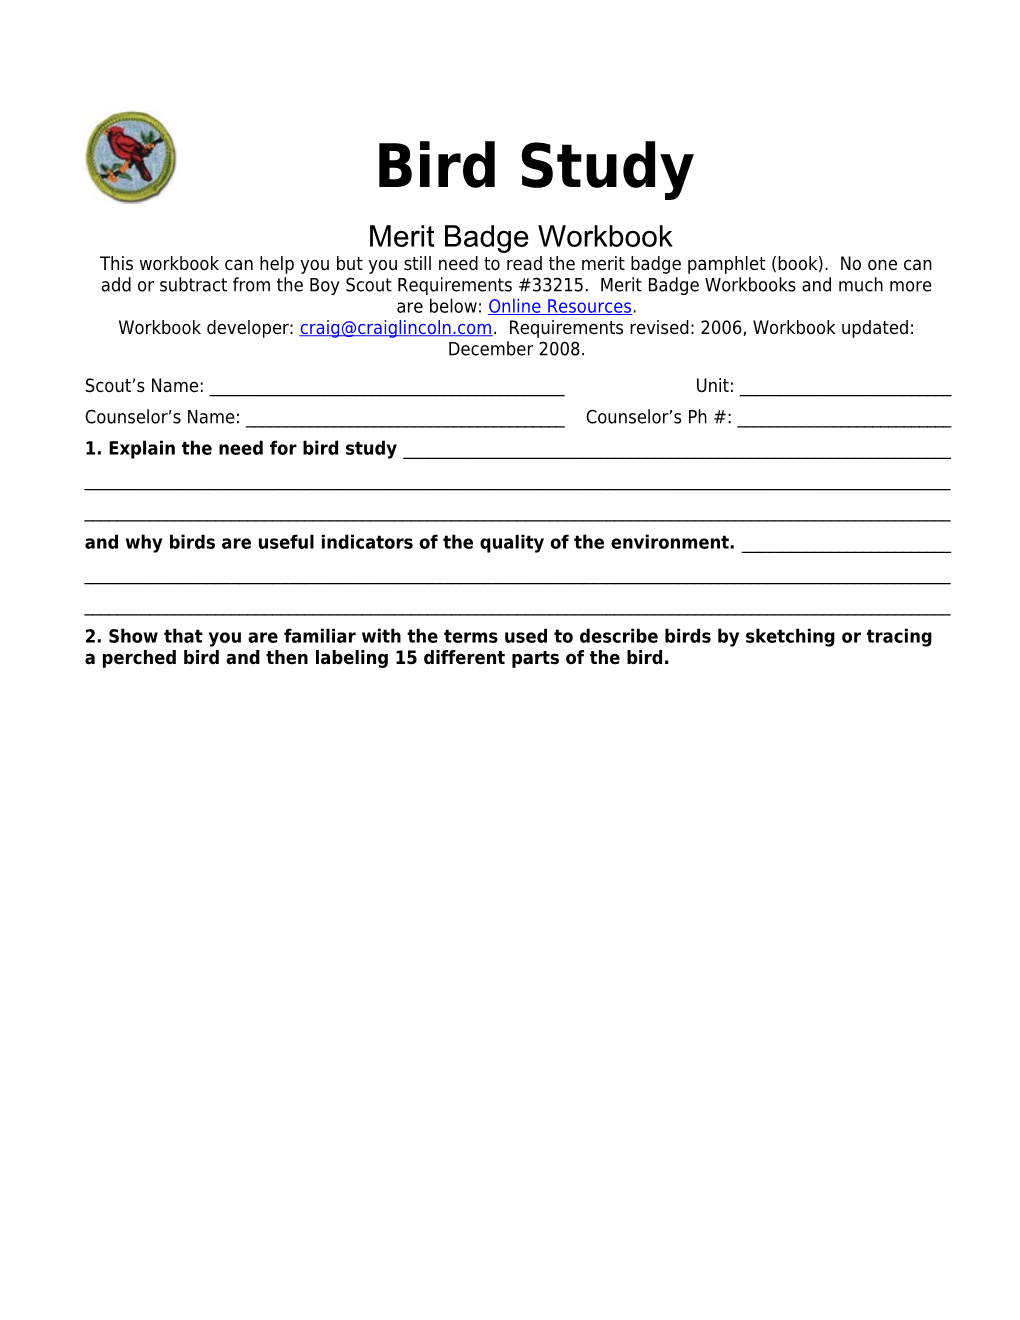 Bird Study P. 8 Merit Badge Workbook Scout's Name: ______